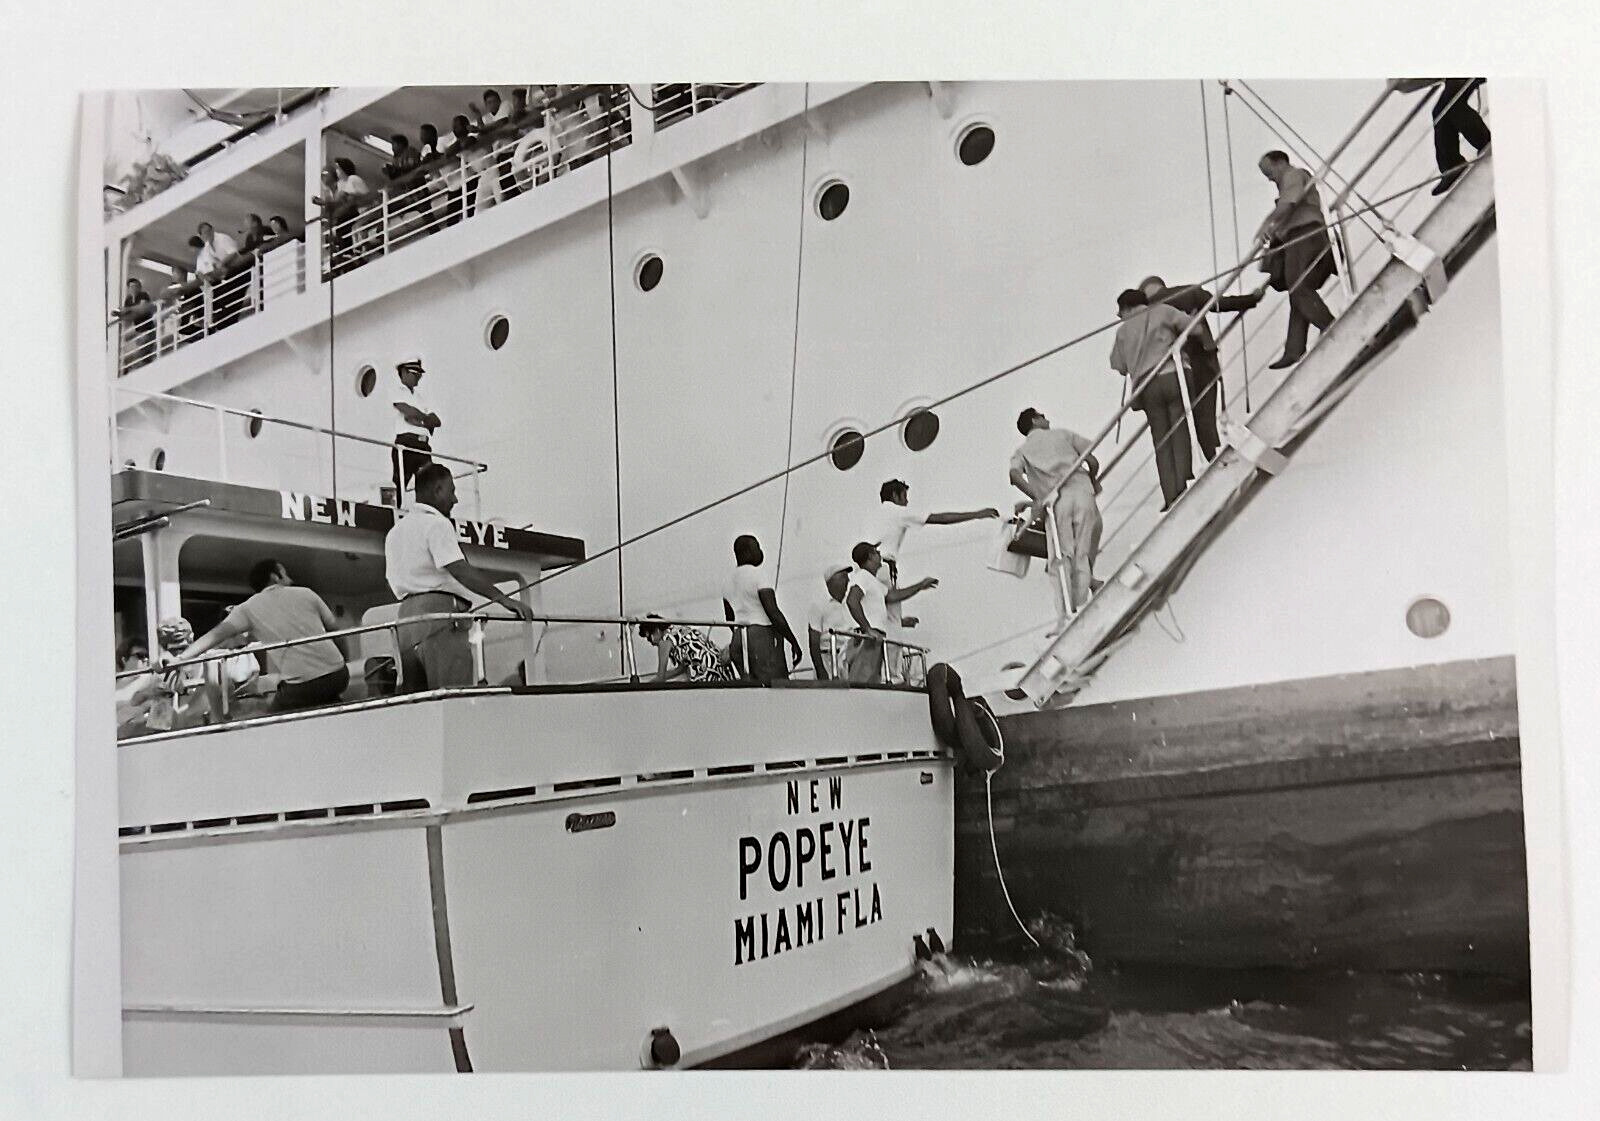 1969 Miami FL New Popeye Boat Tour Cruise Ship Passengers Boarding Press Photo